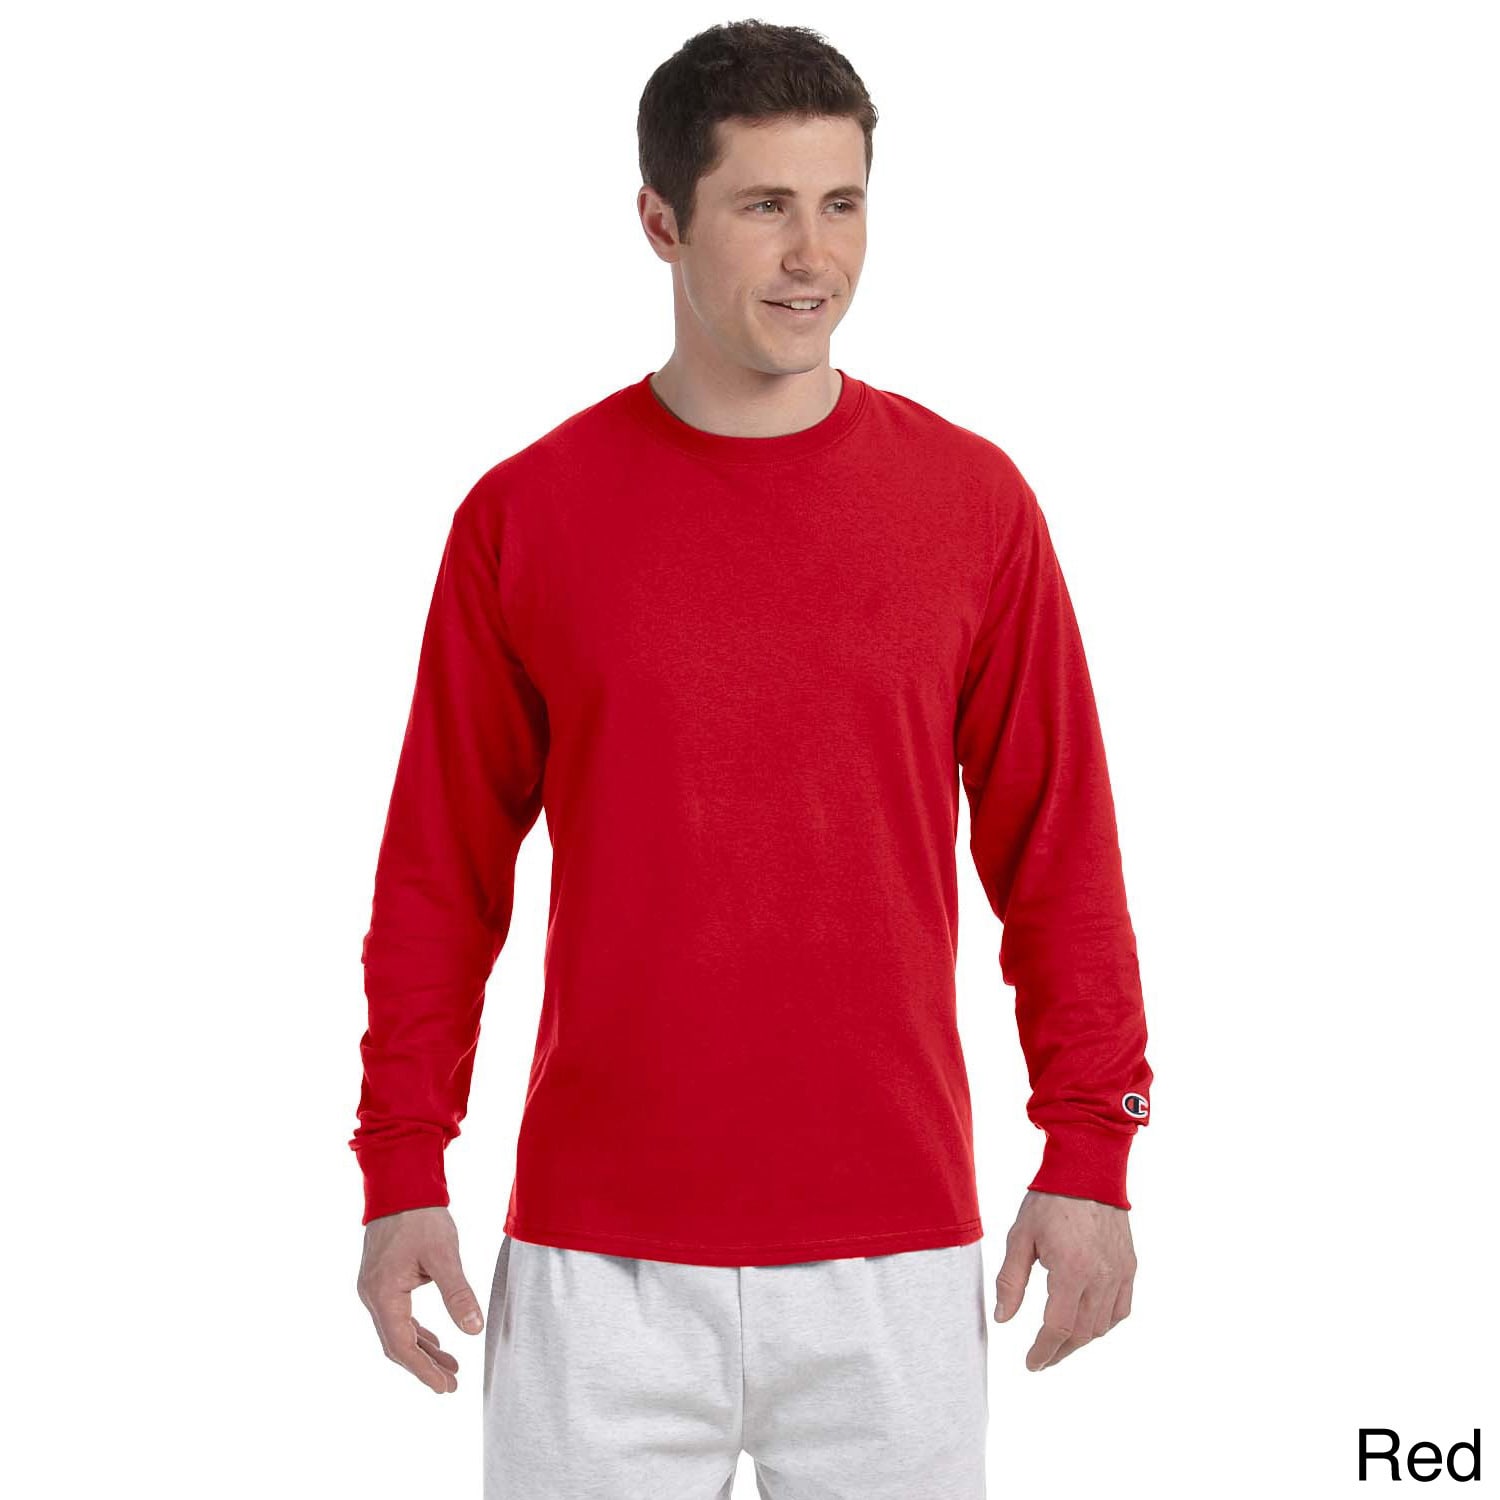 red long sleeve champion shirt